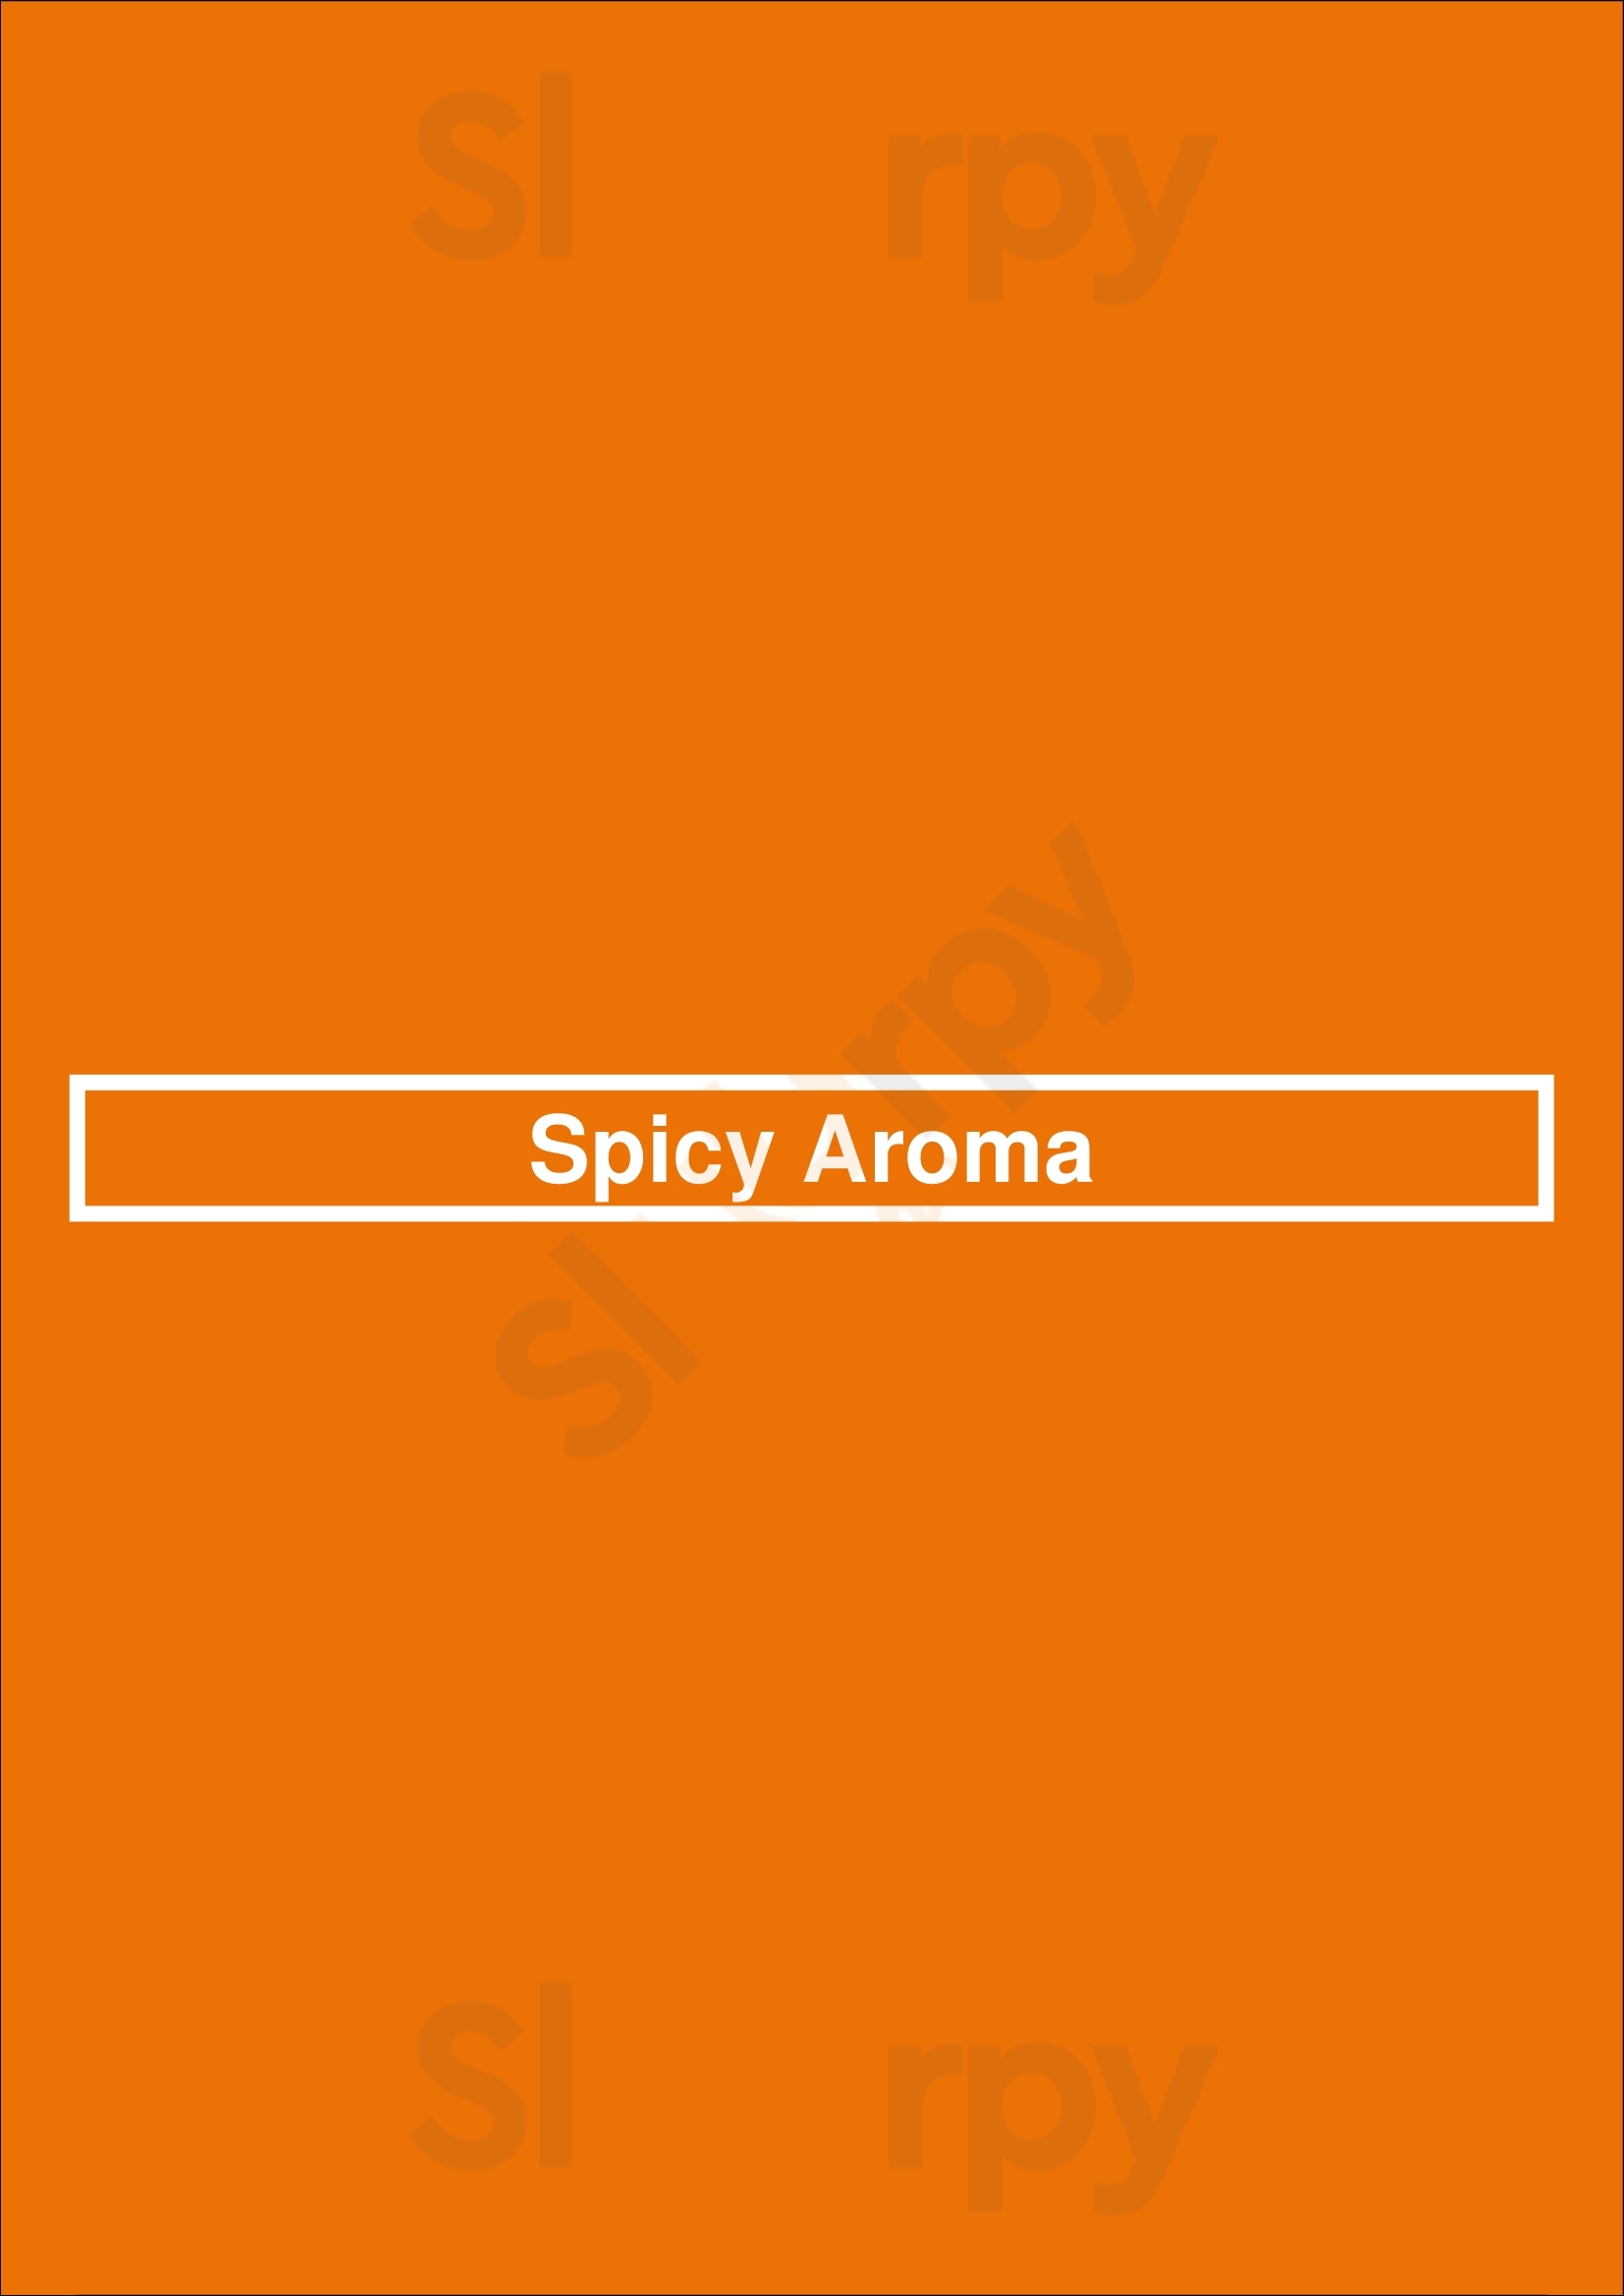 Spicy Aroma Portishead Menu - 1